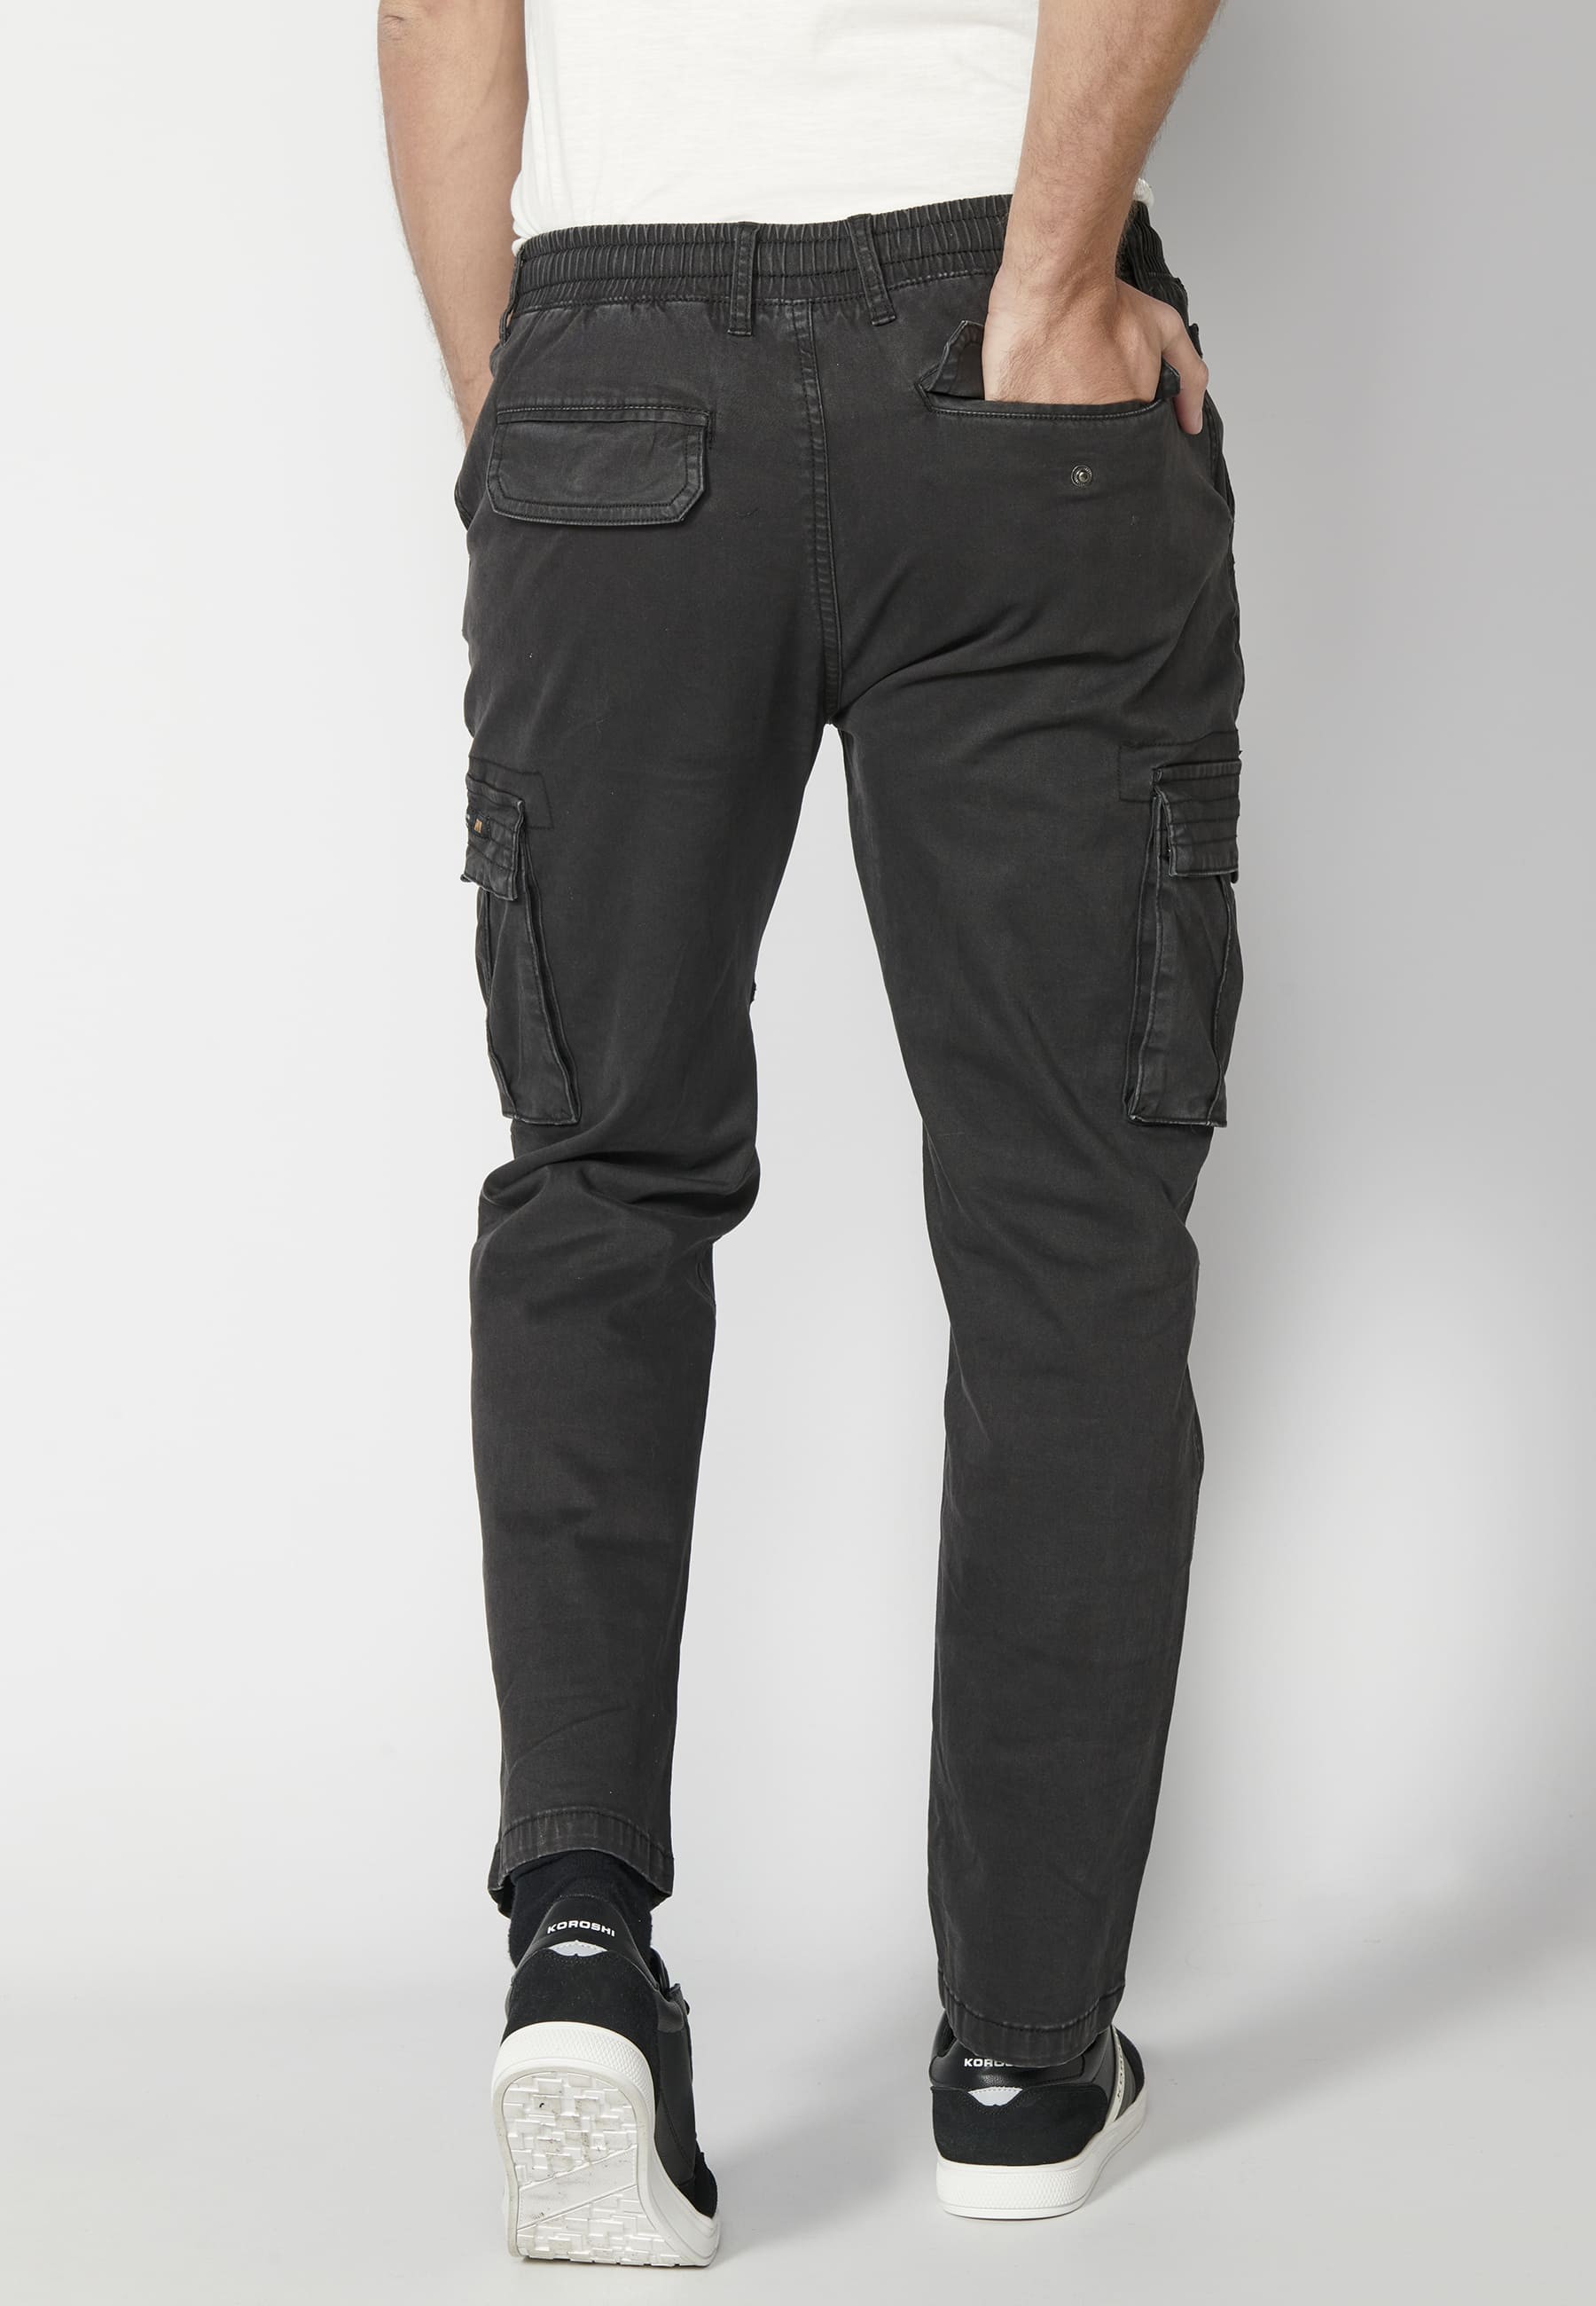 Black cargo style pants for Men